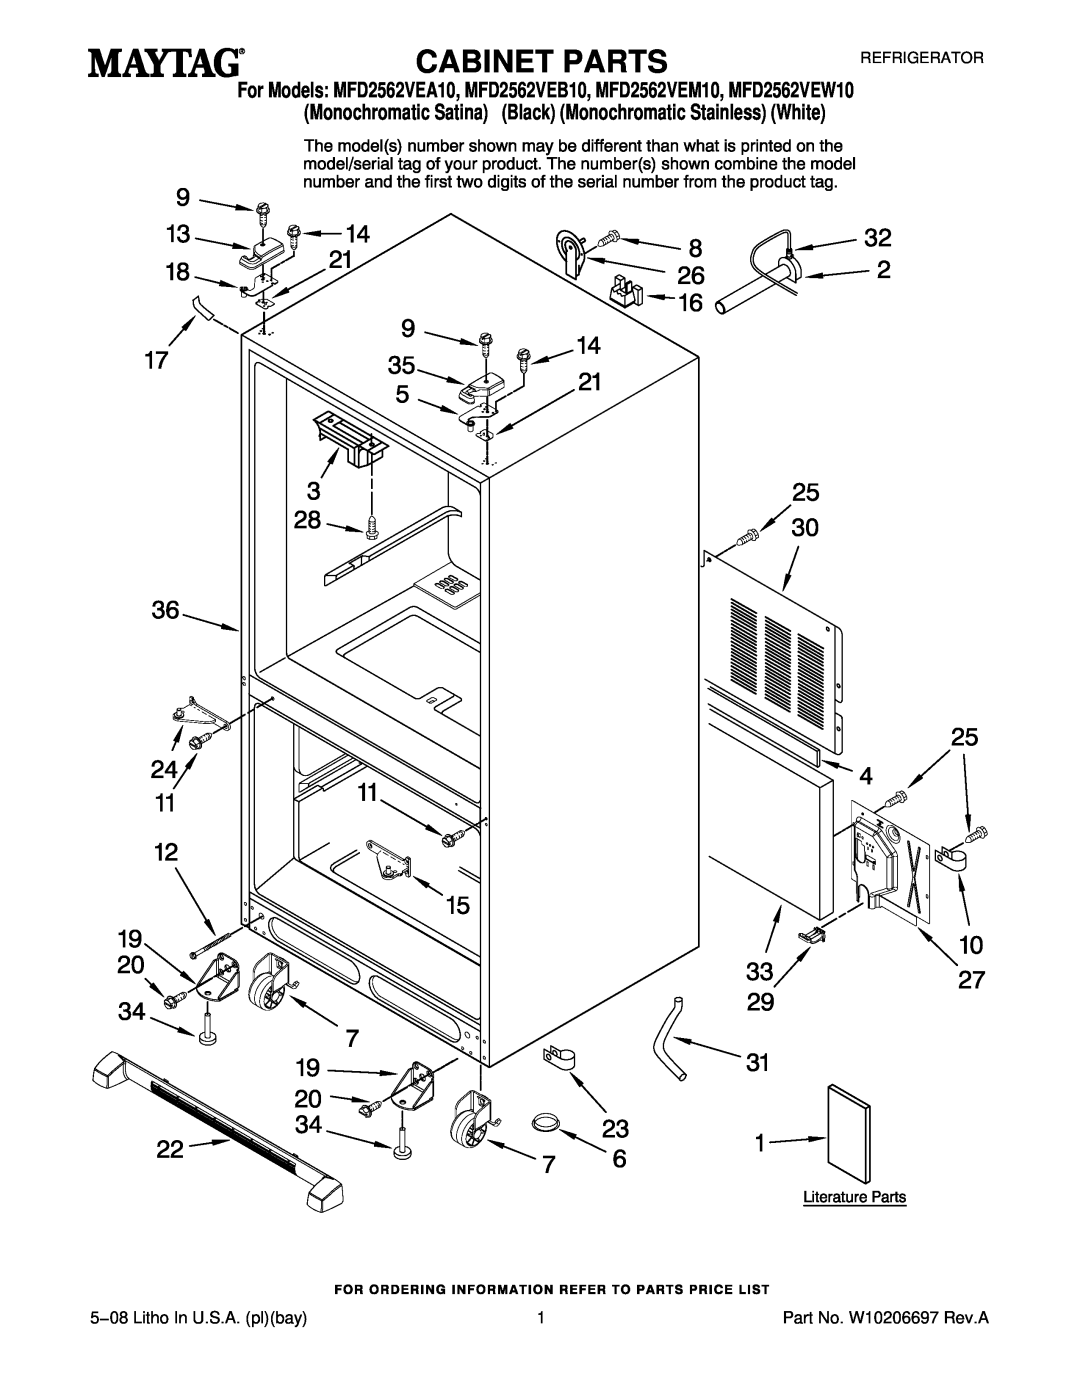 Maytag MFD2562VEM10, MFD2562VEB10 manual Cabinet Parts, 5−08 Litho In U.S.A. plbay, Part No. W10206697 Rev.A, Refrigerator 